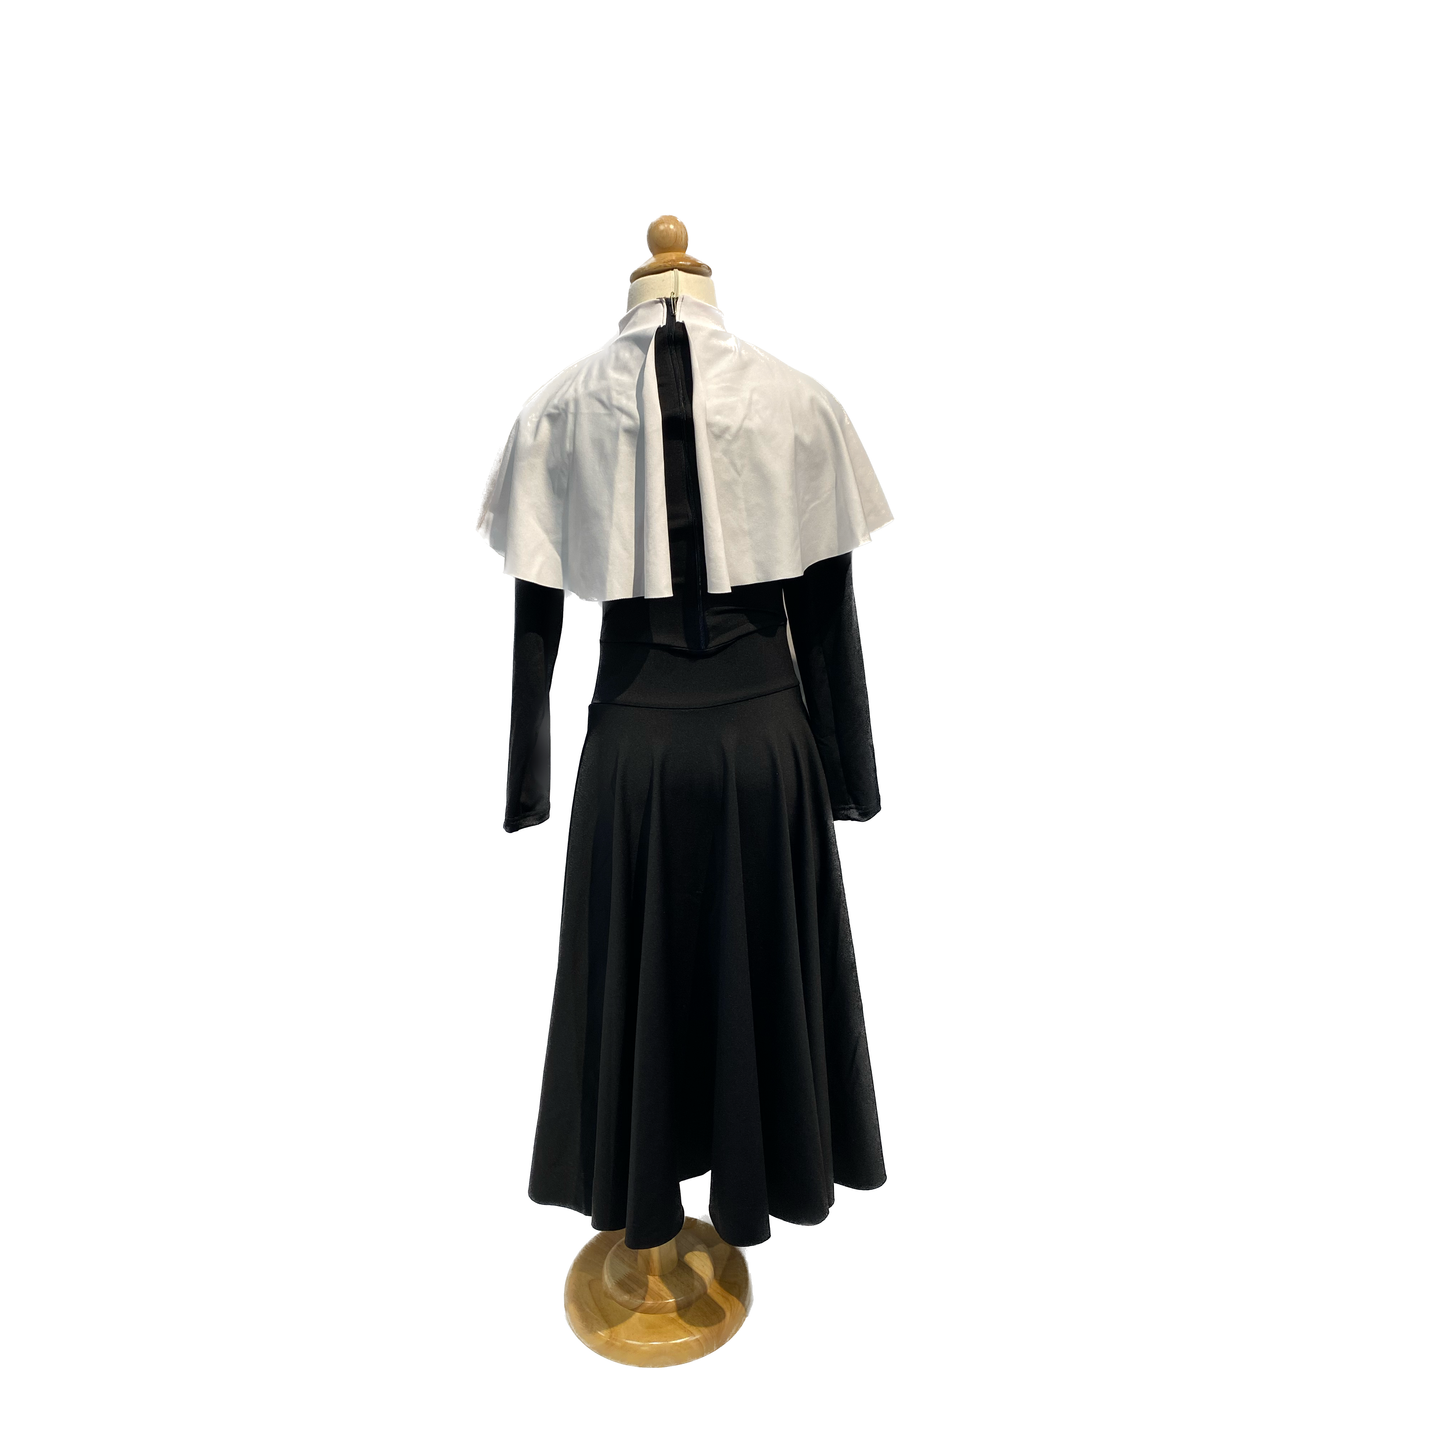 Nun dress